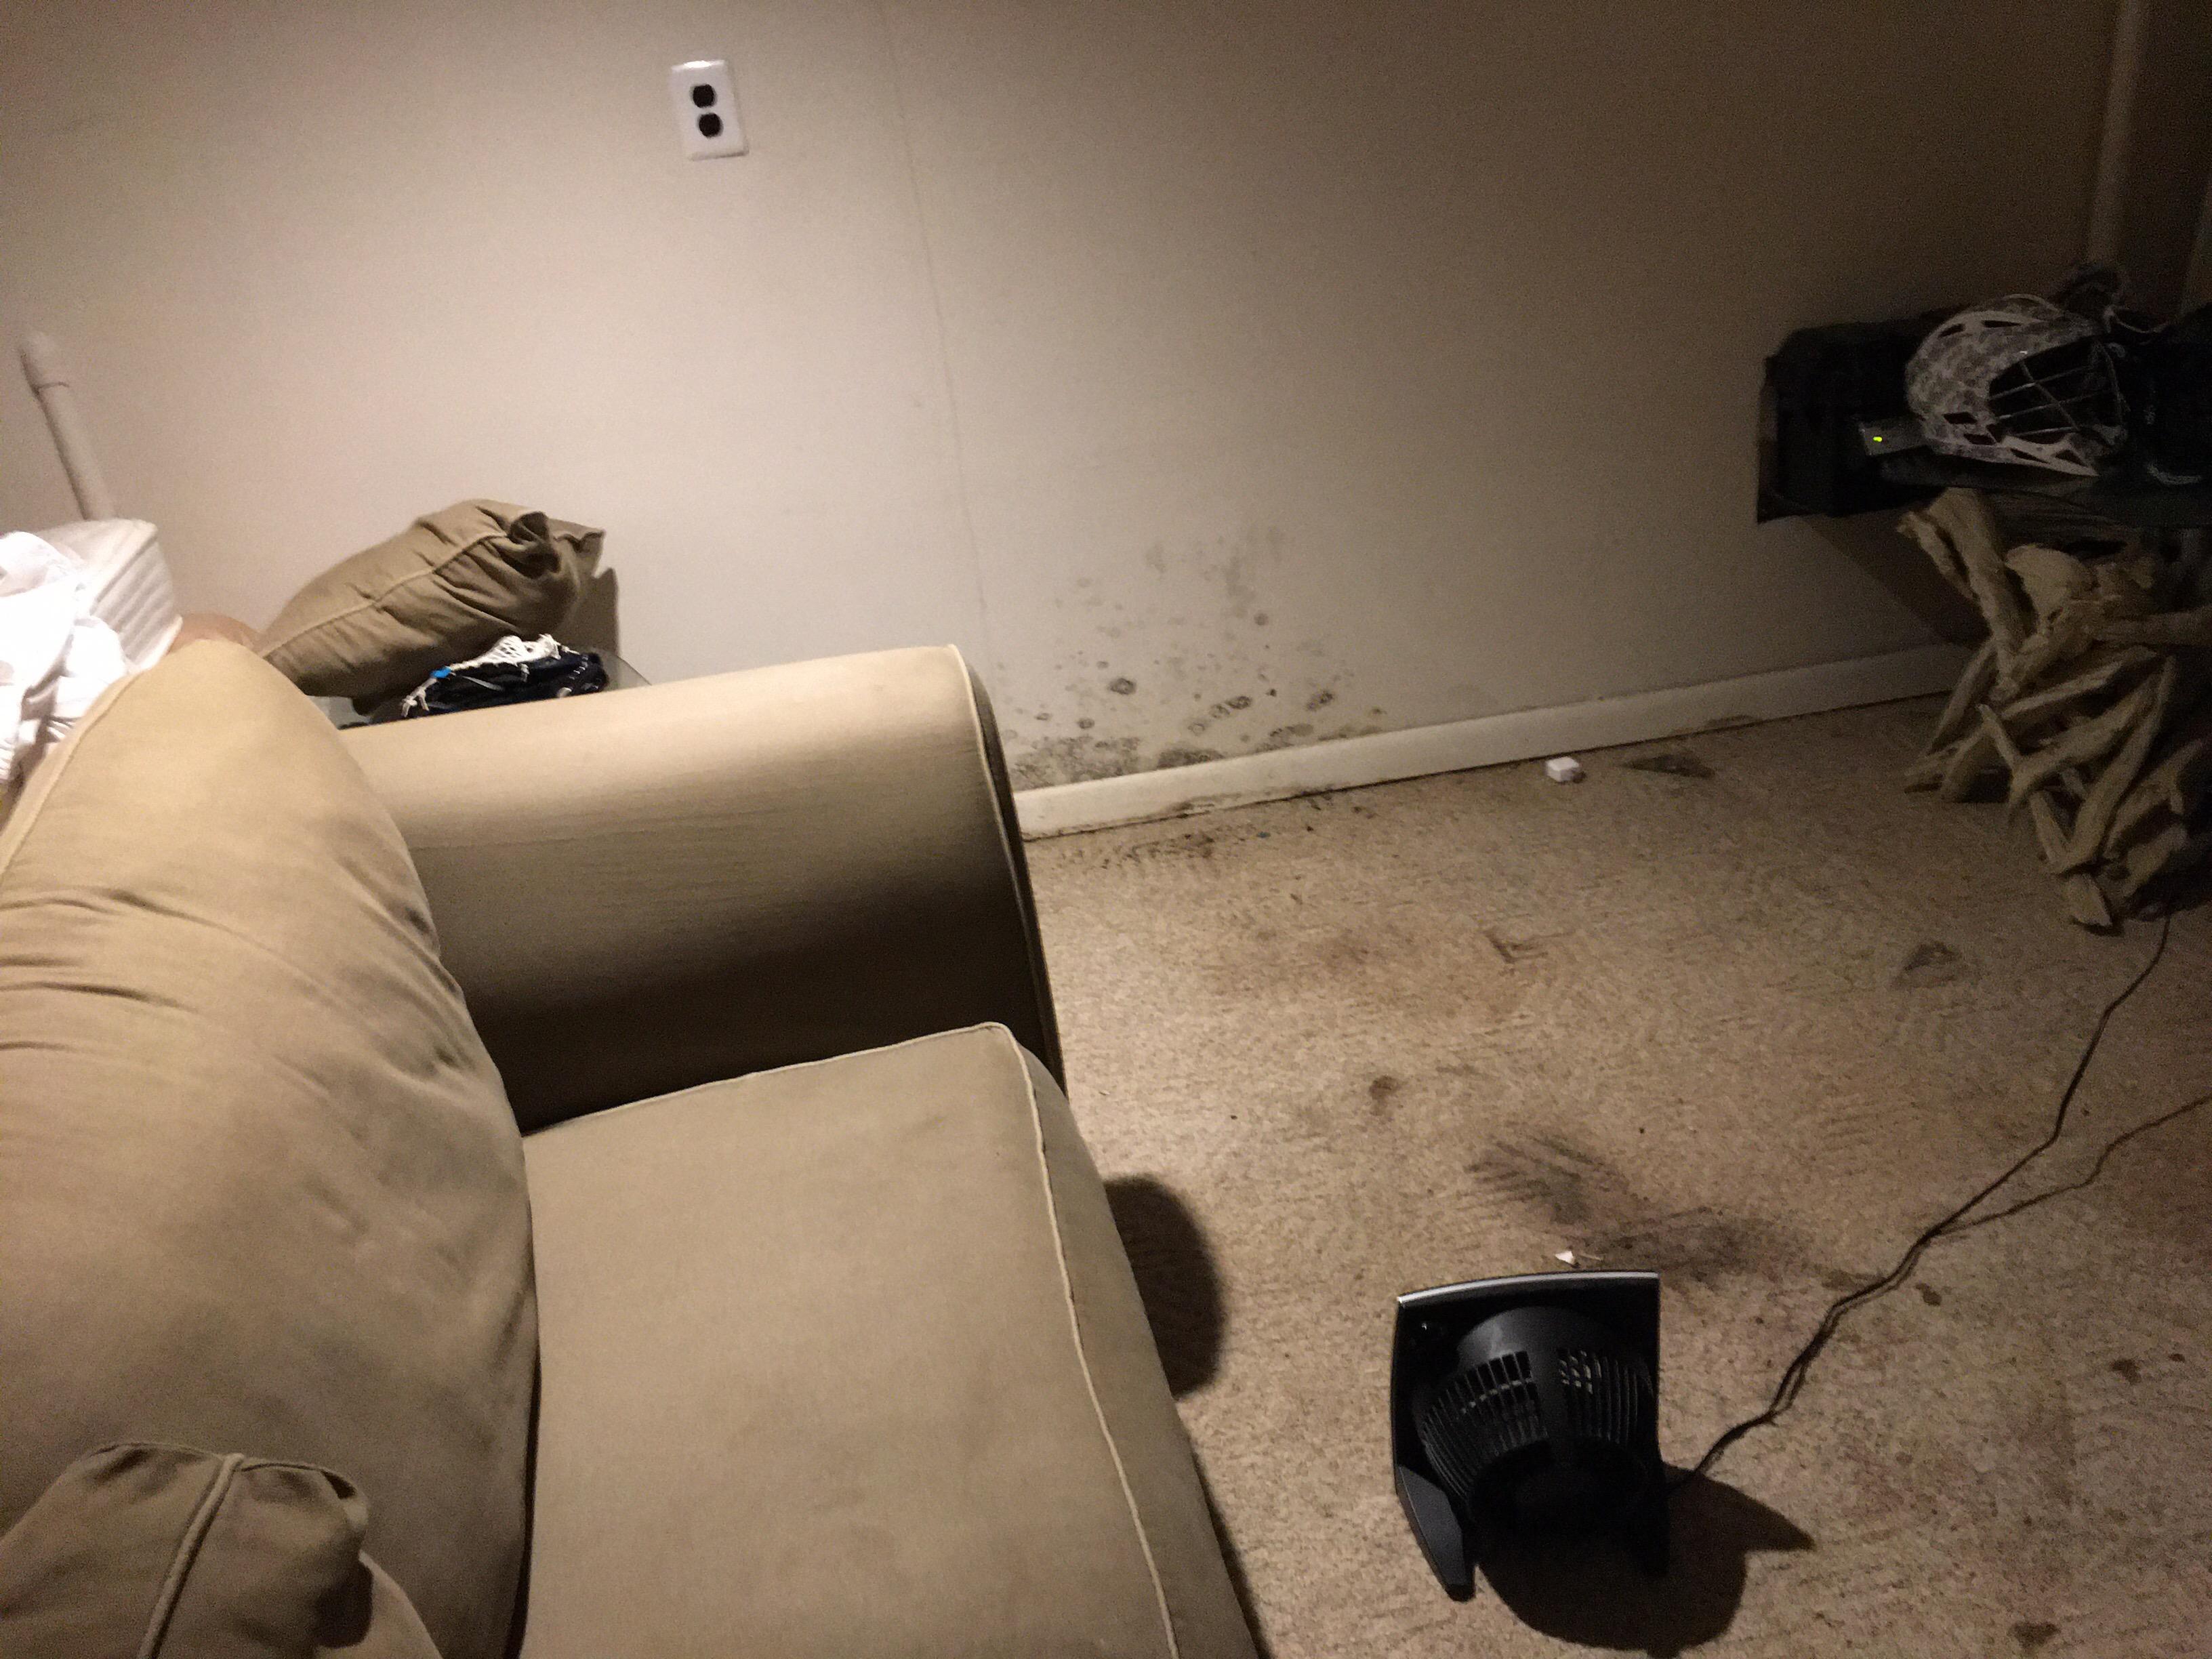 Water damage in basement